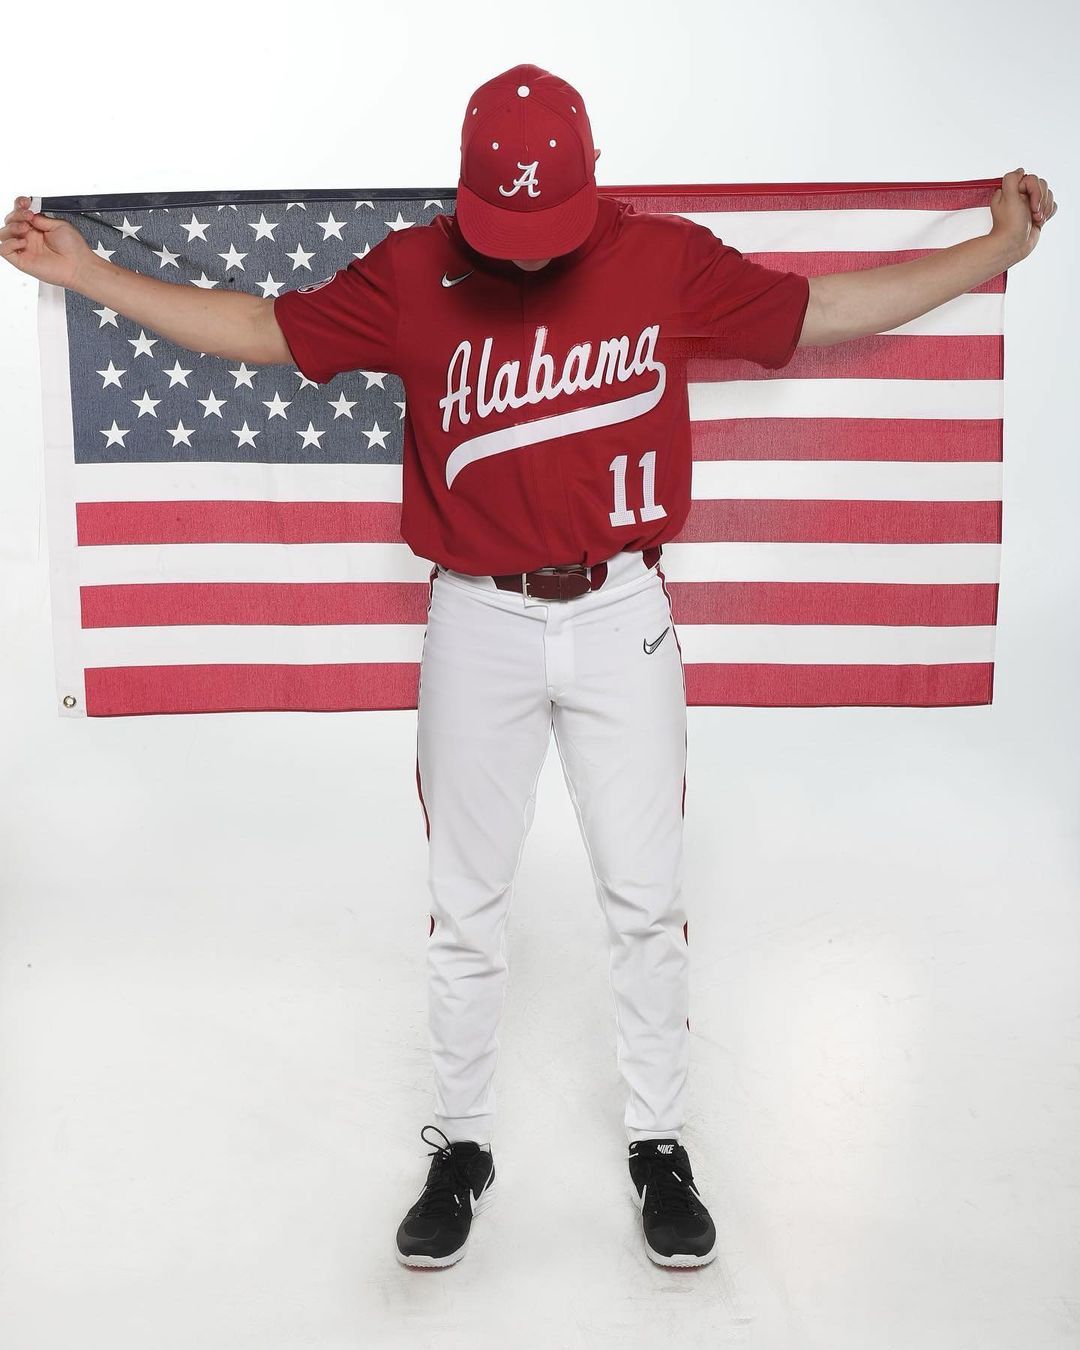 Parker Picot Alabama Crimson Tide baseball Rochester Adams High School Highlanders MLB draft